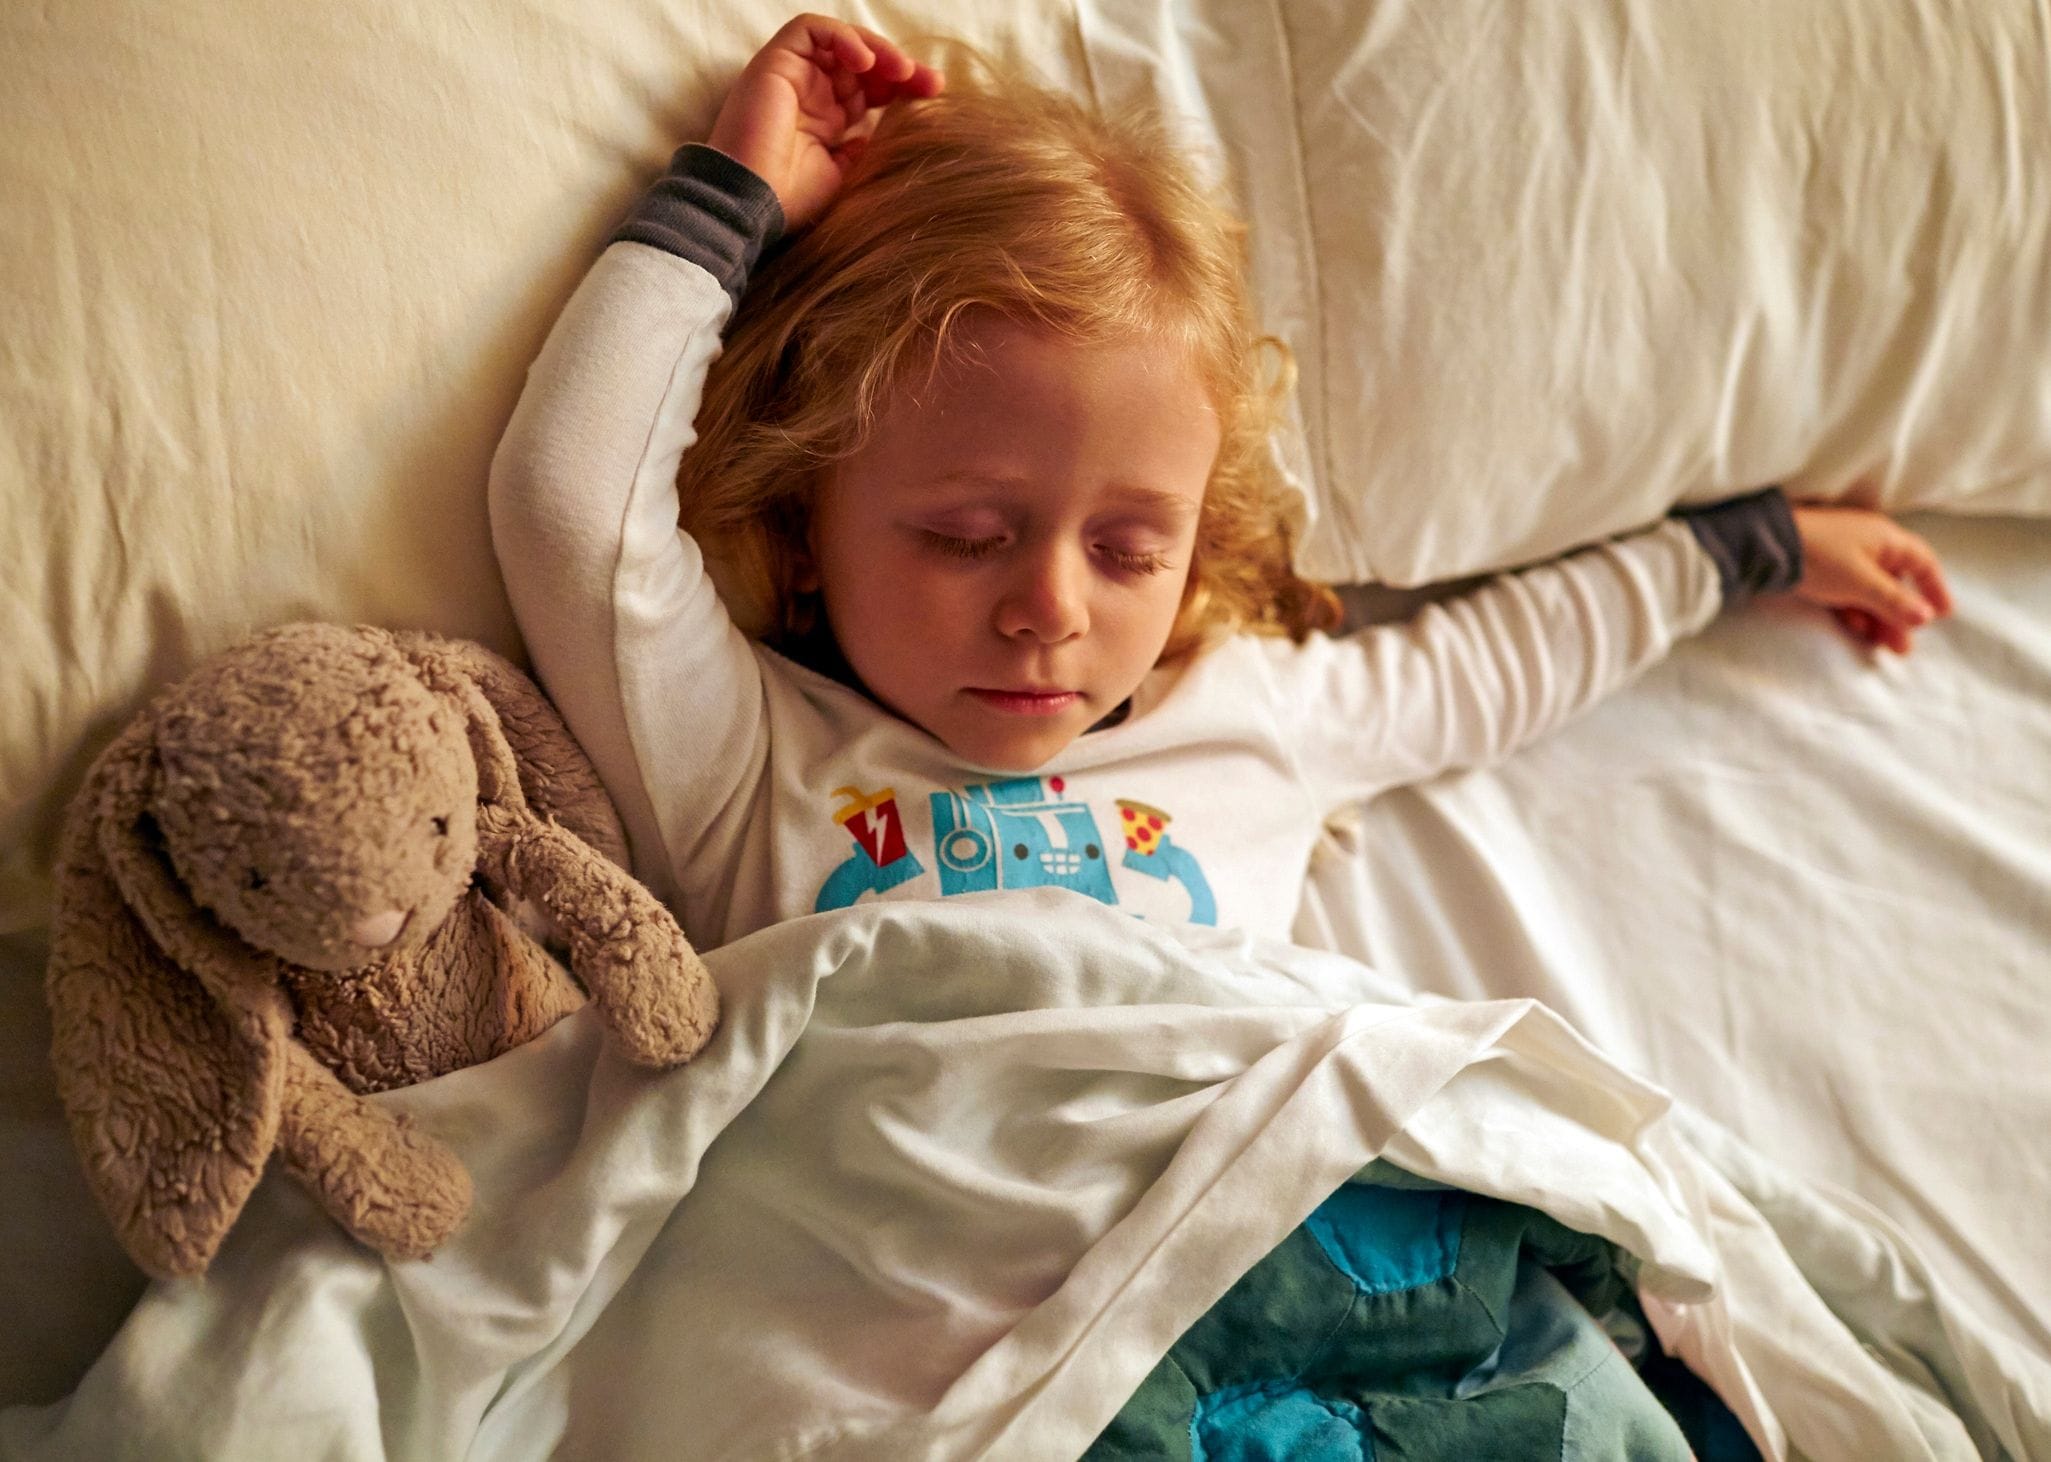 6 potential toddler pillow hazards, plus 6 safer kids’ pillow picks